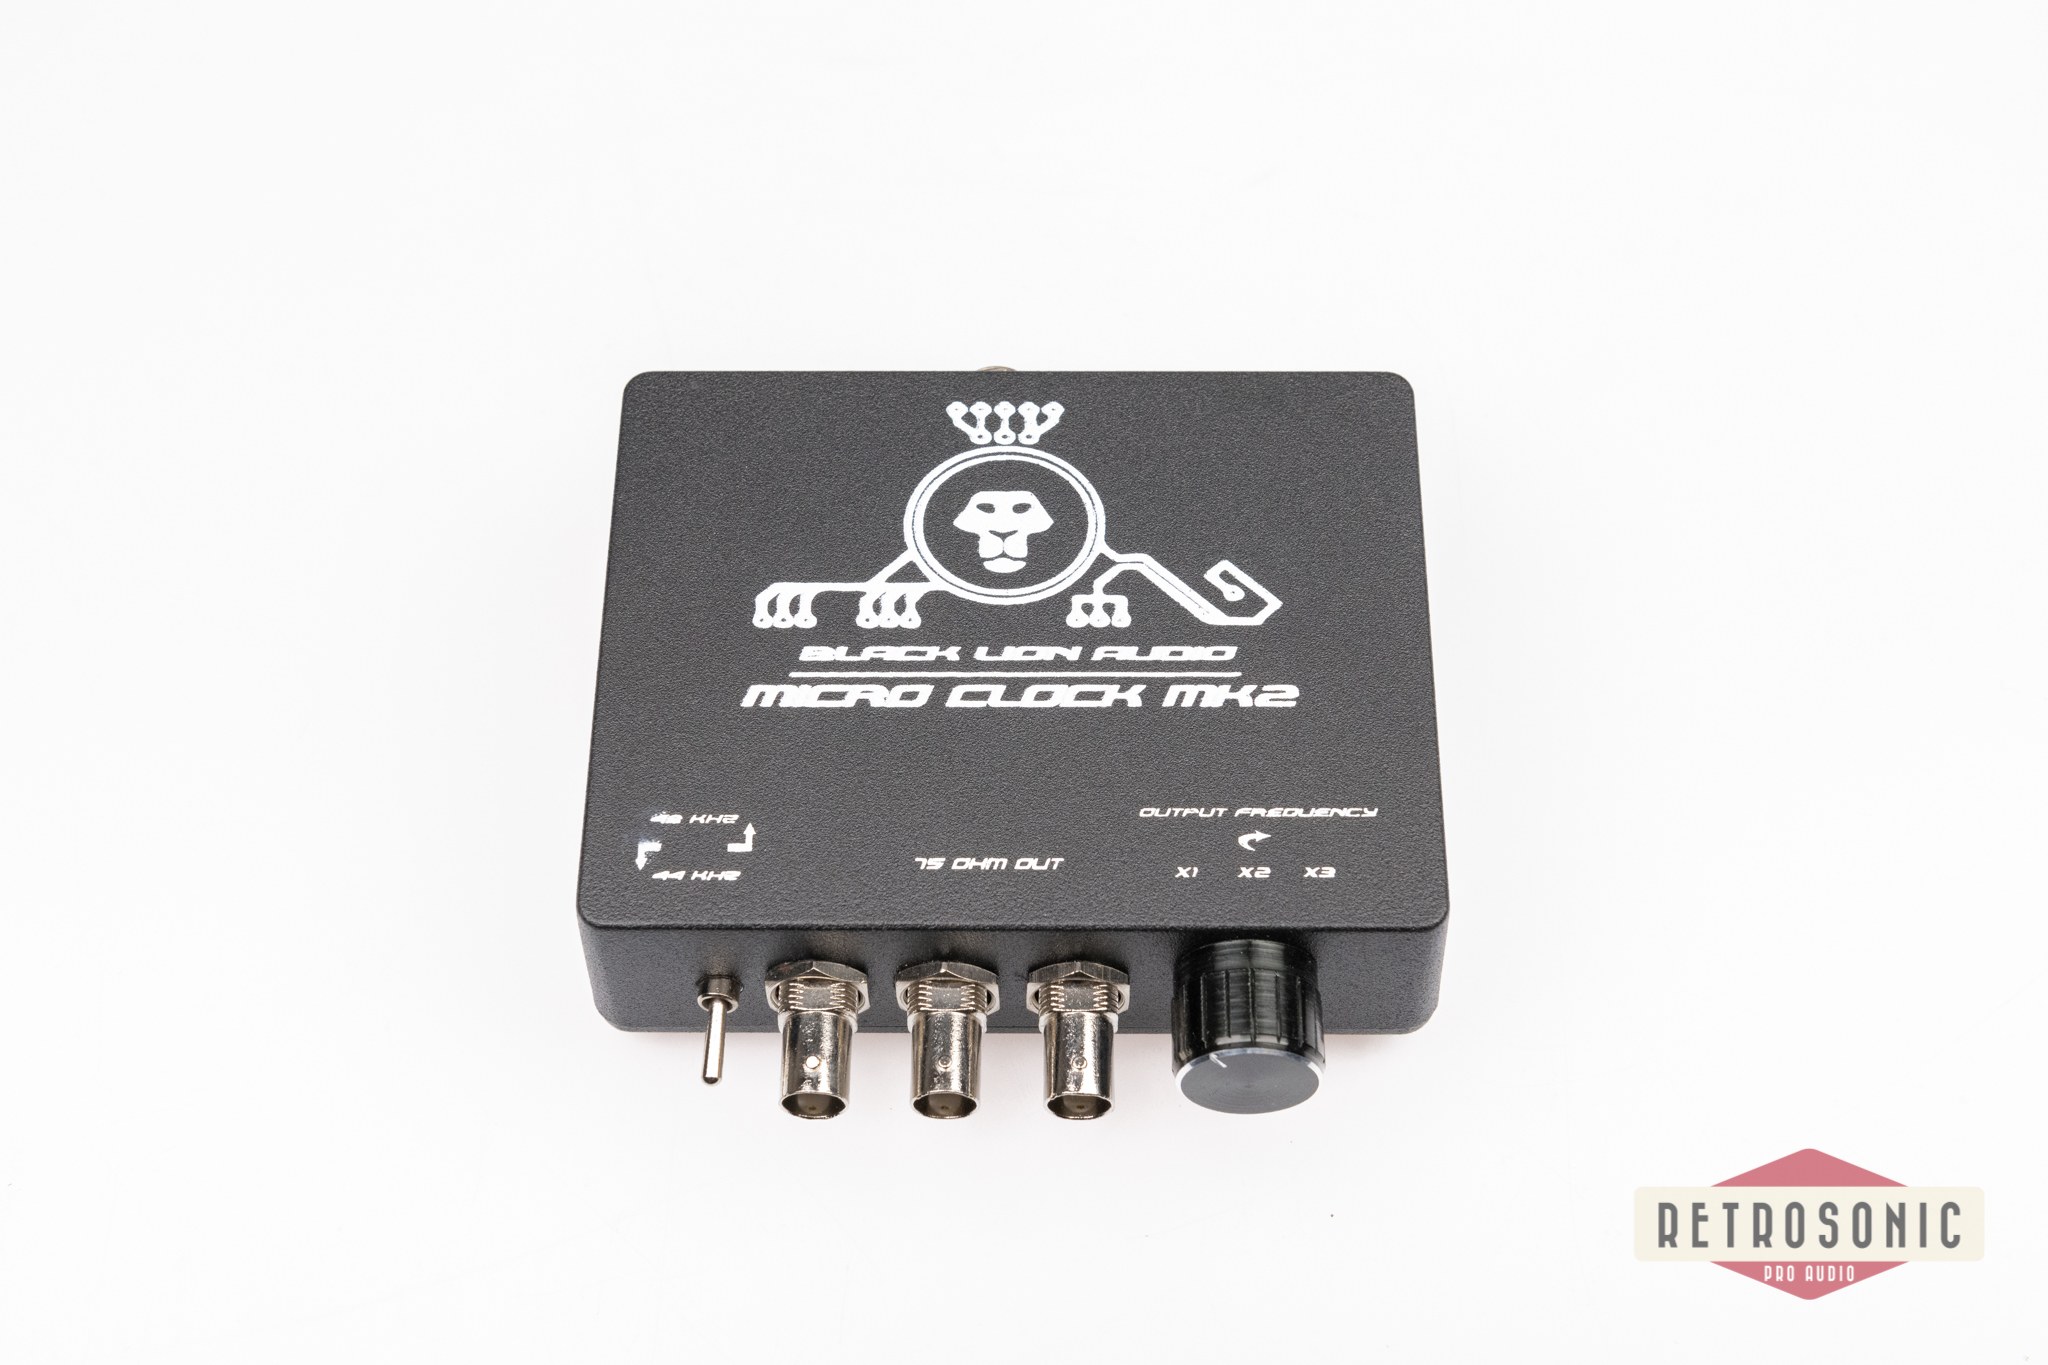 Black Lion Audio Micro Clock Mk2